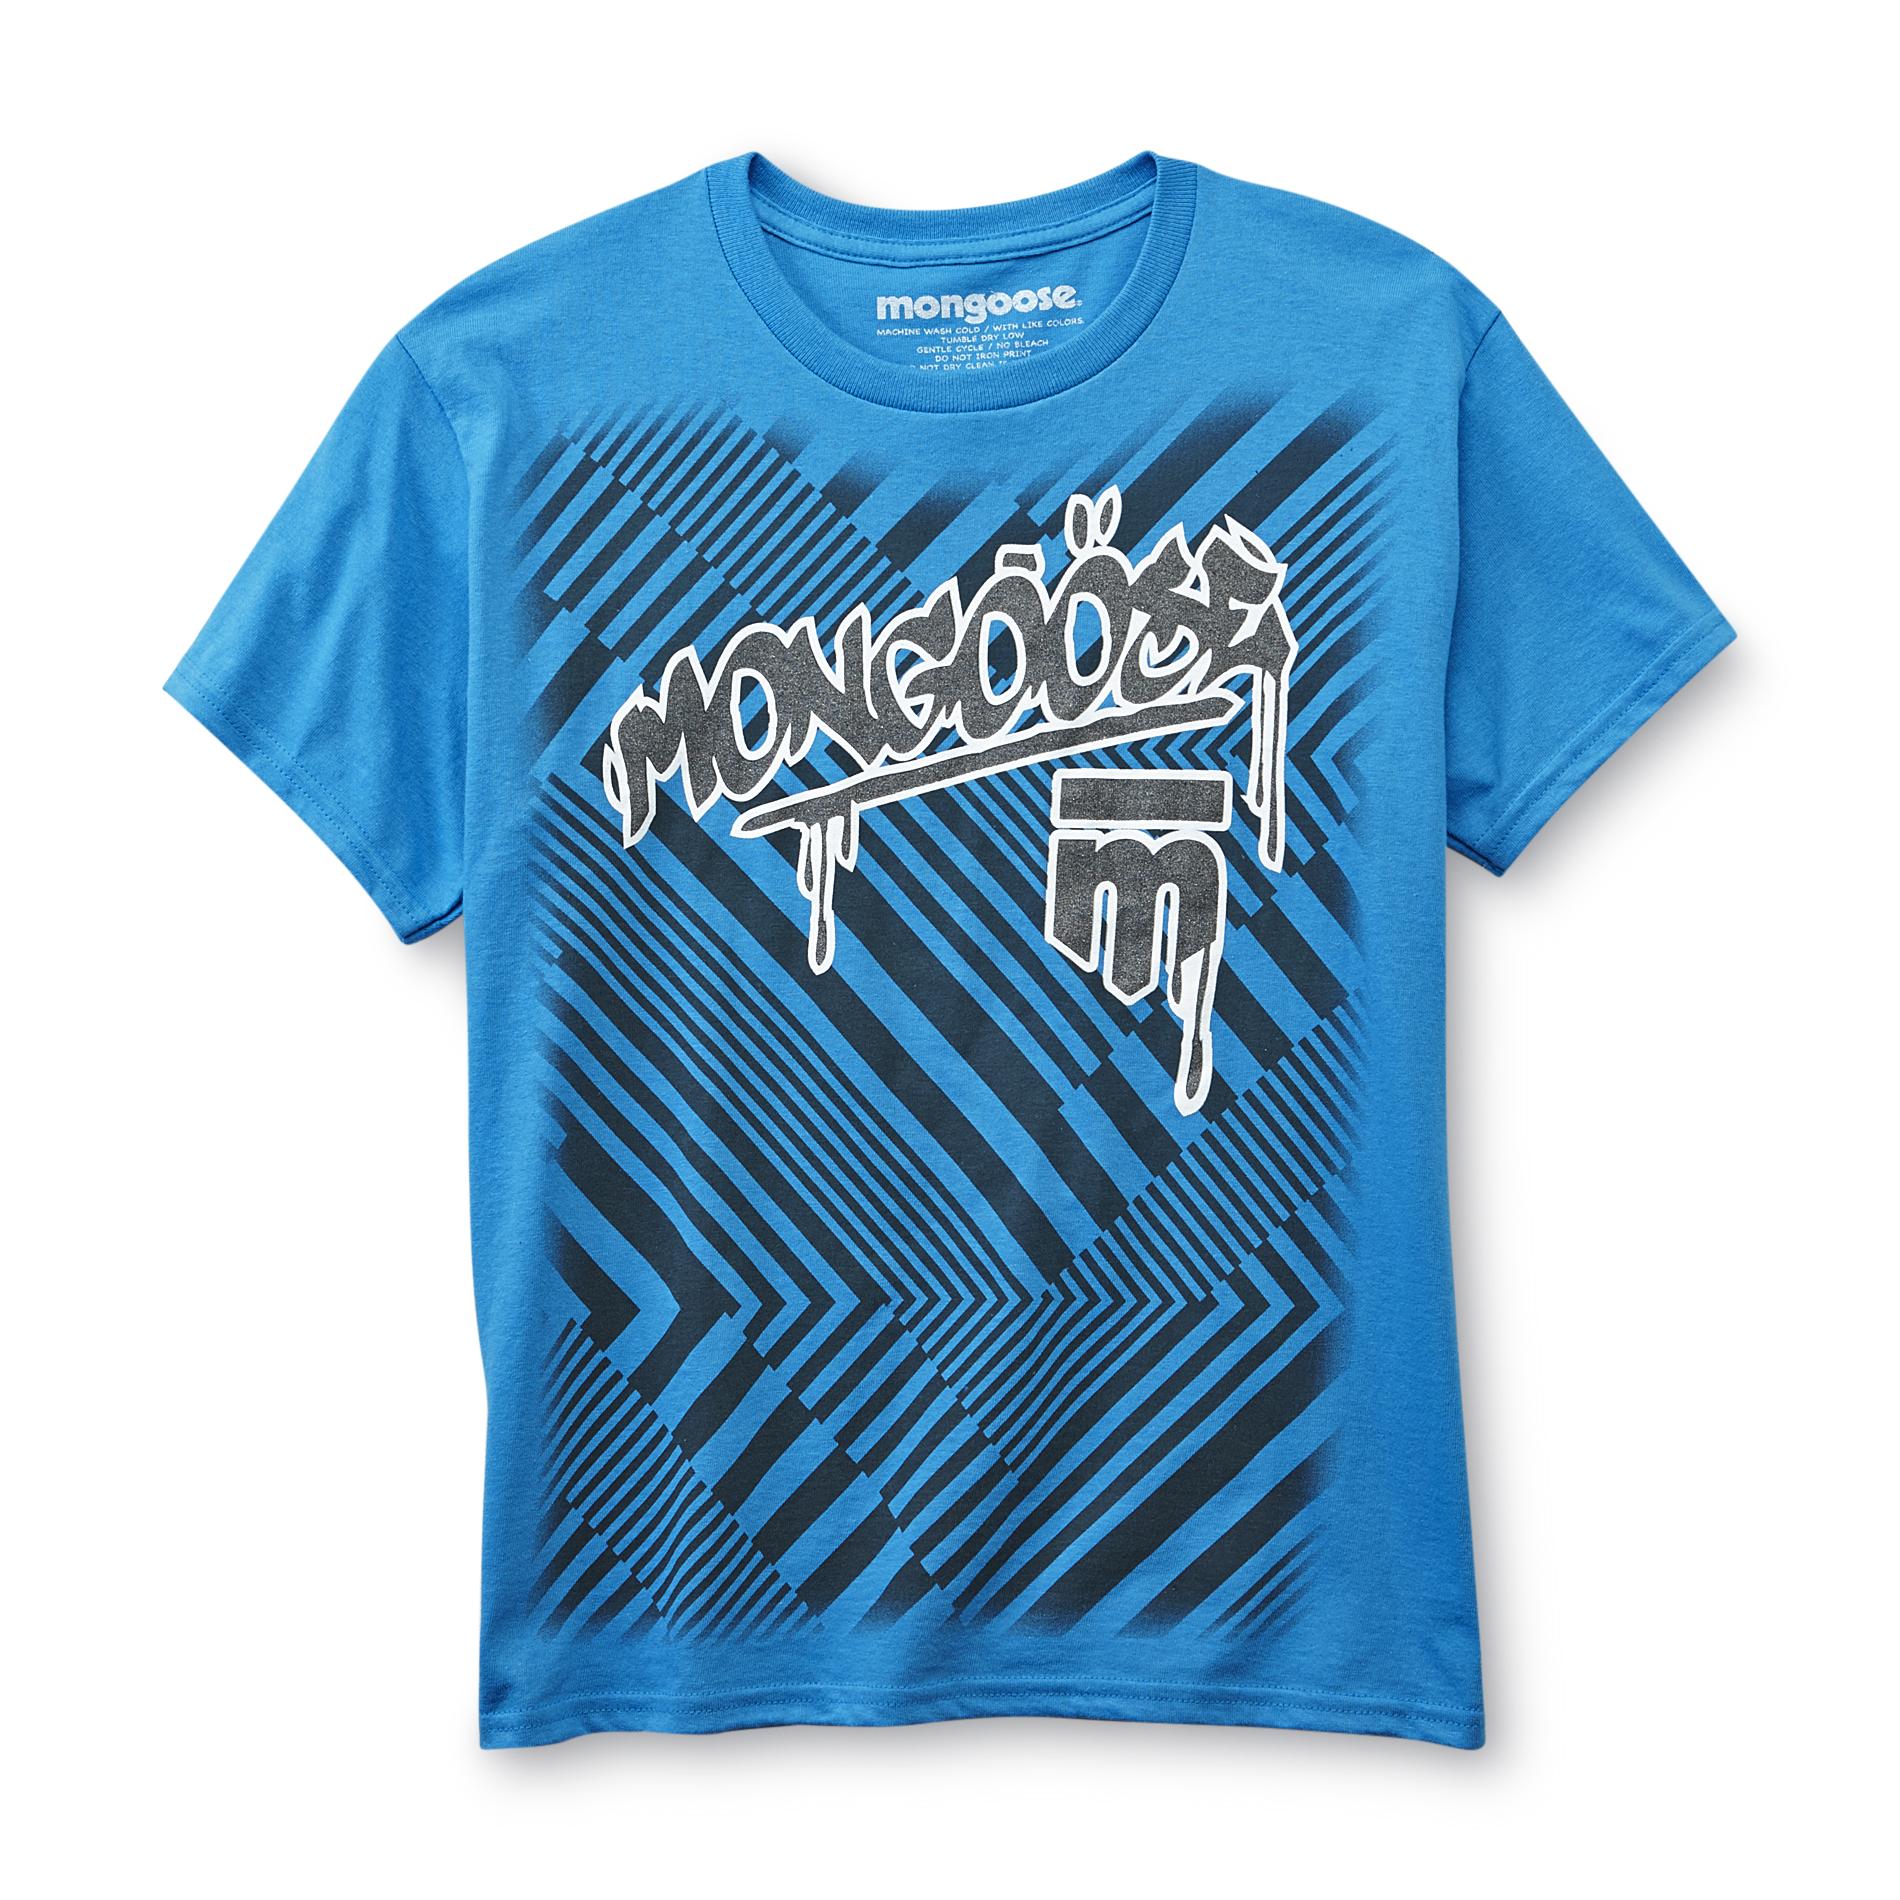 Mongoose Boy's Graphic T-Shirt - Geometric Striped